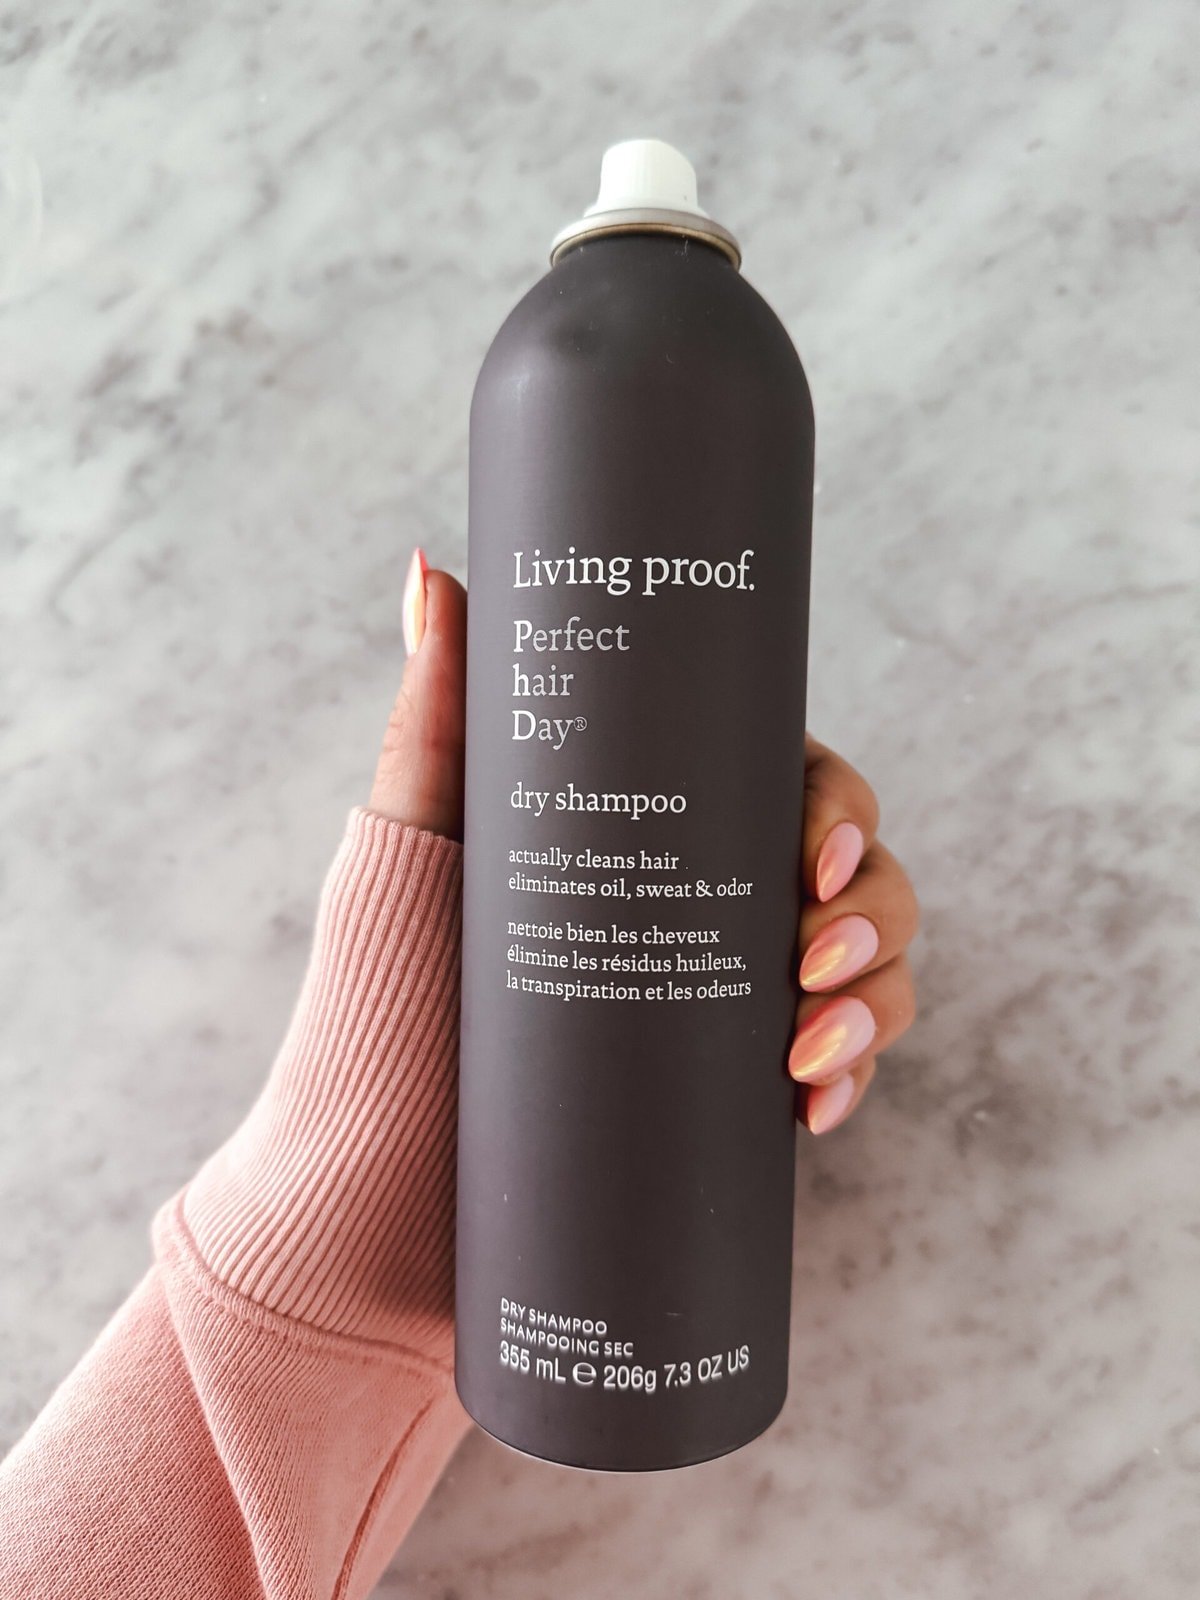 Living proof dry shampoo set